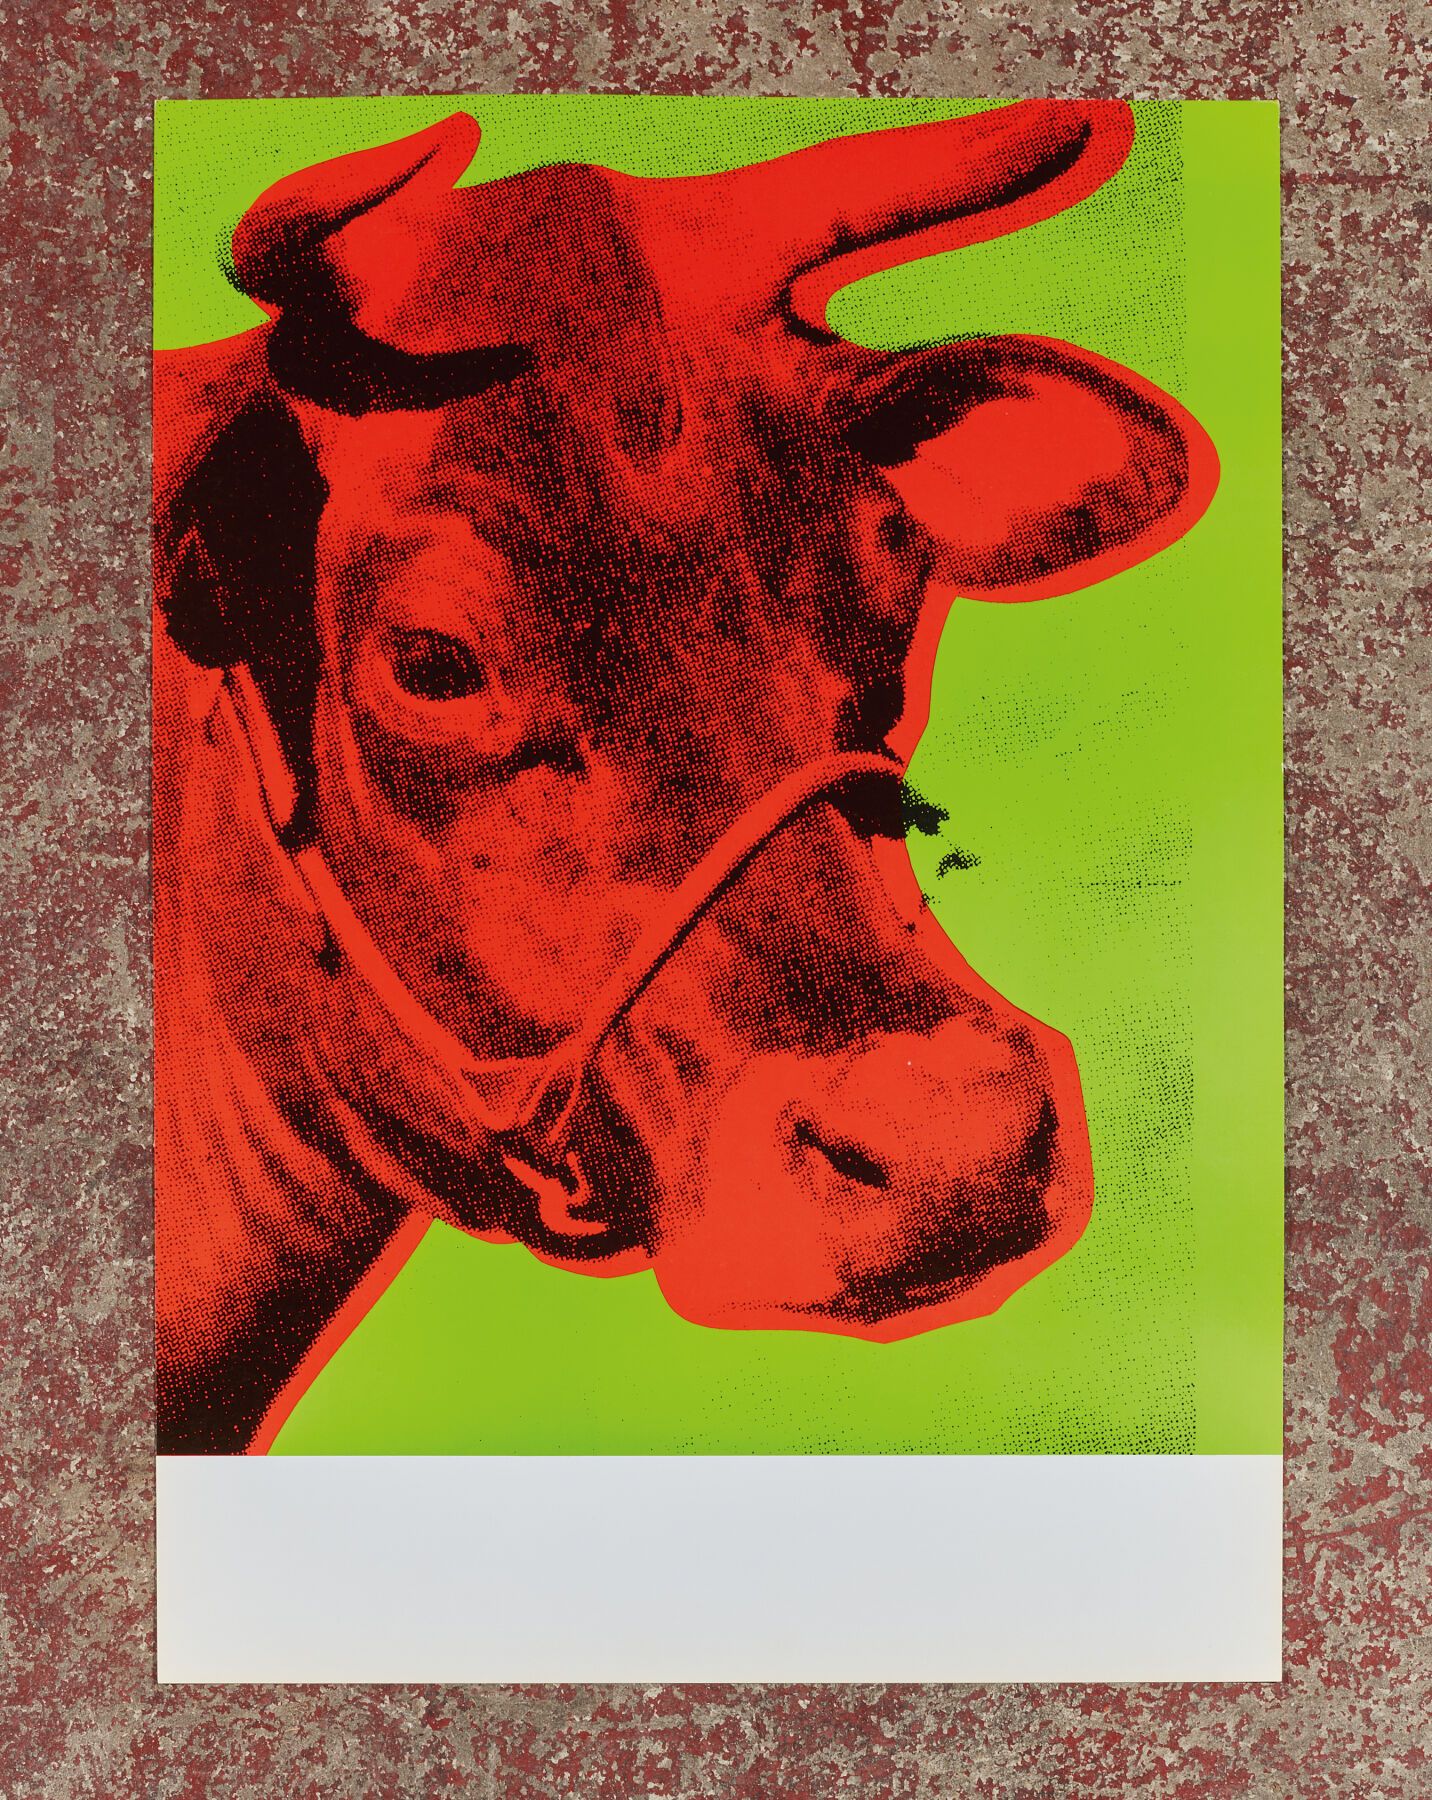 Null Andy WARHOL (dopo).
Mucca rossa - 1970.
Litografia offset su carta.
Poster &hellip;